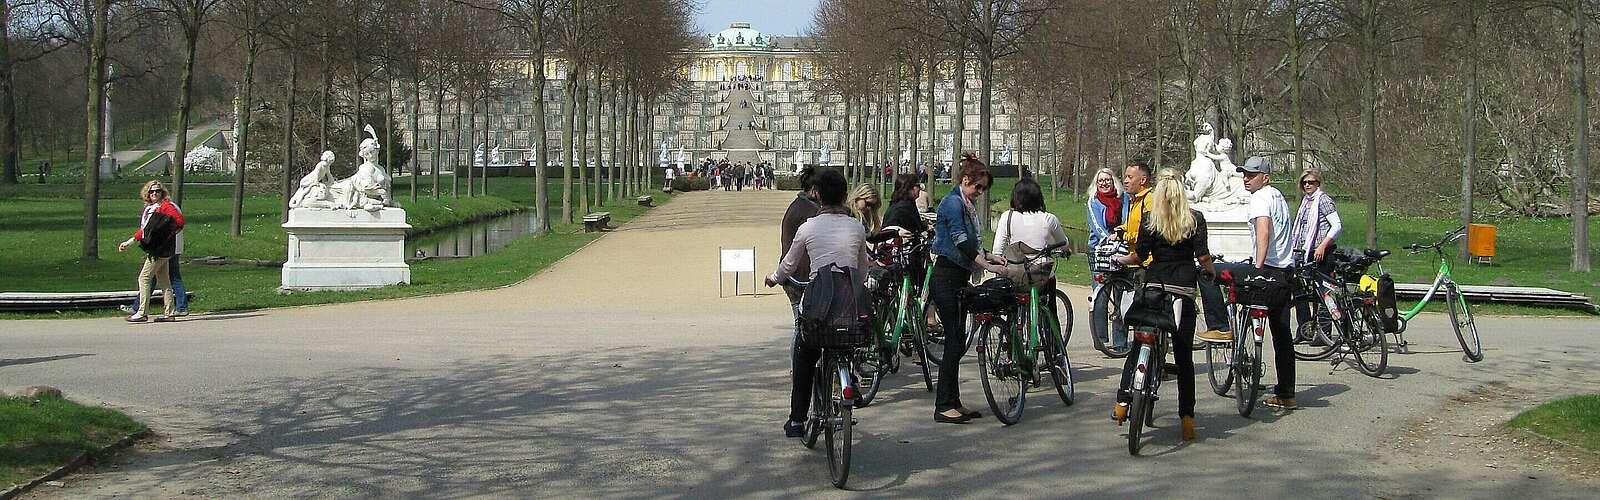 Fahrradfahrer vor dem Schloss Sanssouci,
        
    

        Foto: Fotograf / Lizenz - Media Import/Matthias Fricke